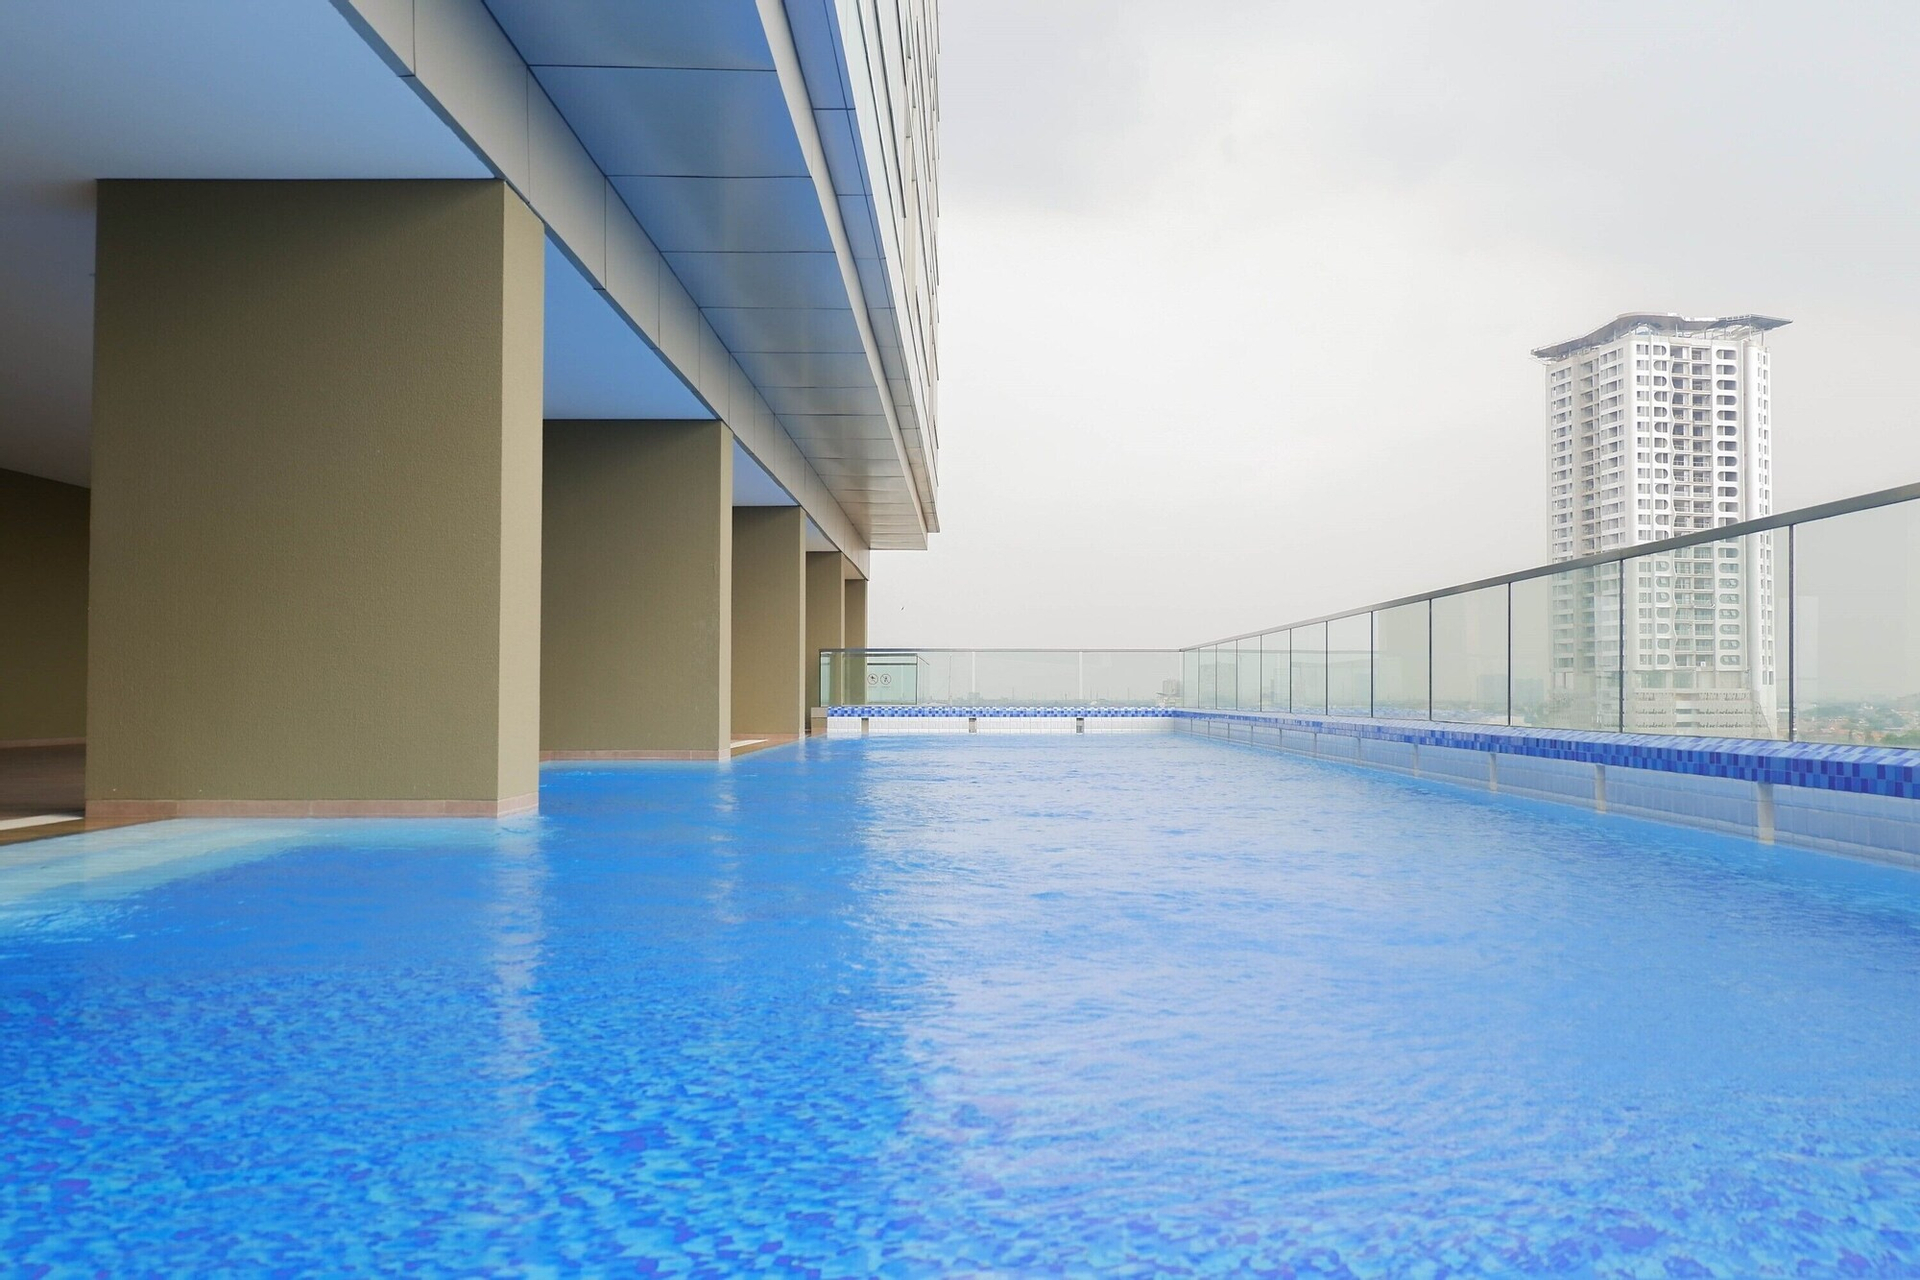 Outdoor pool 4, Exquisite 1BR at Praxis Apartment, Surabaya